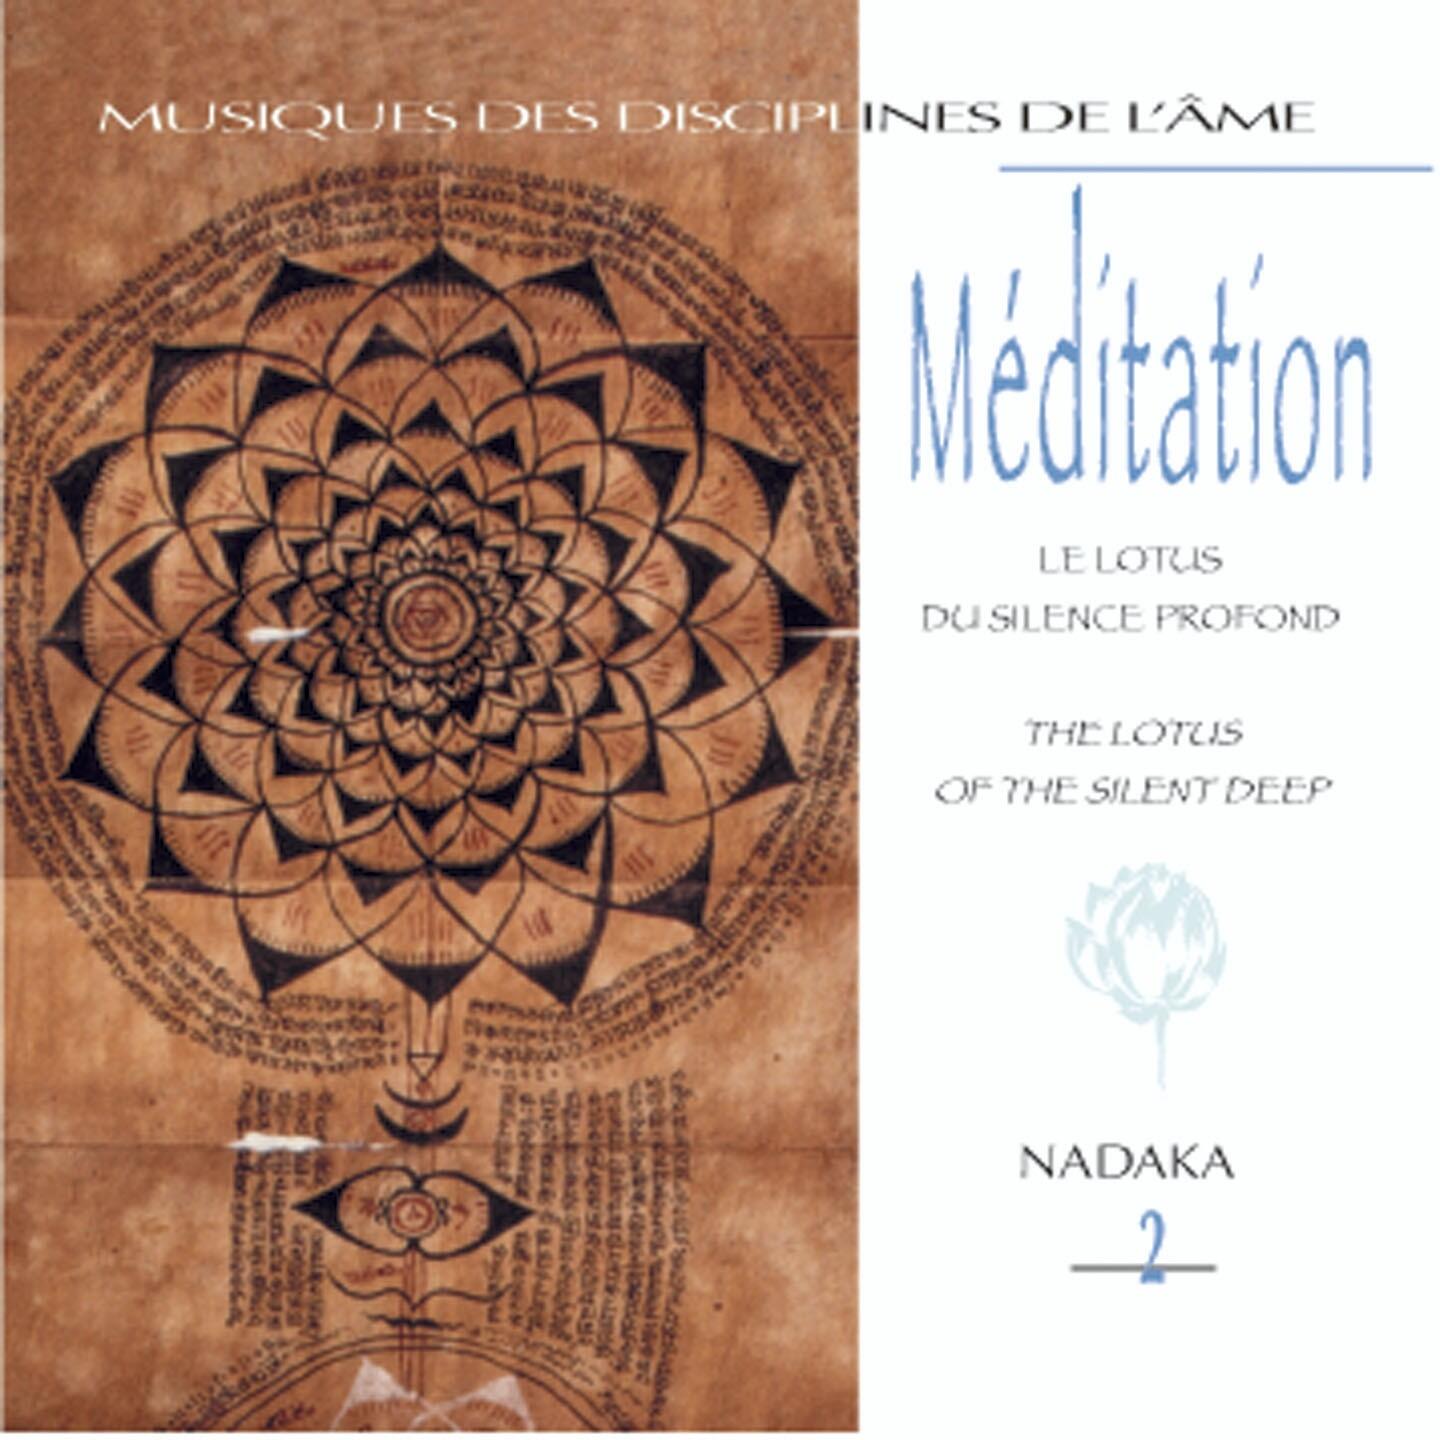 Nadaka - Musiques des disciplines de l'âme: méditation 2 | iHeart